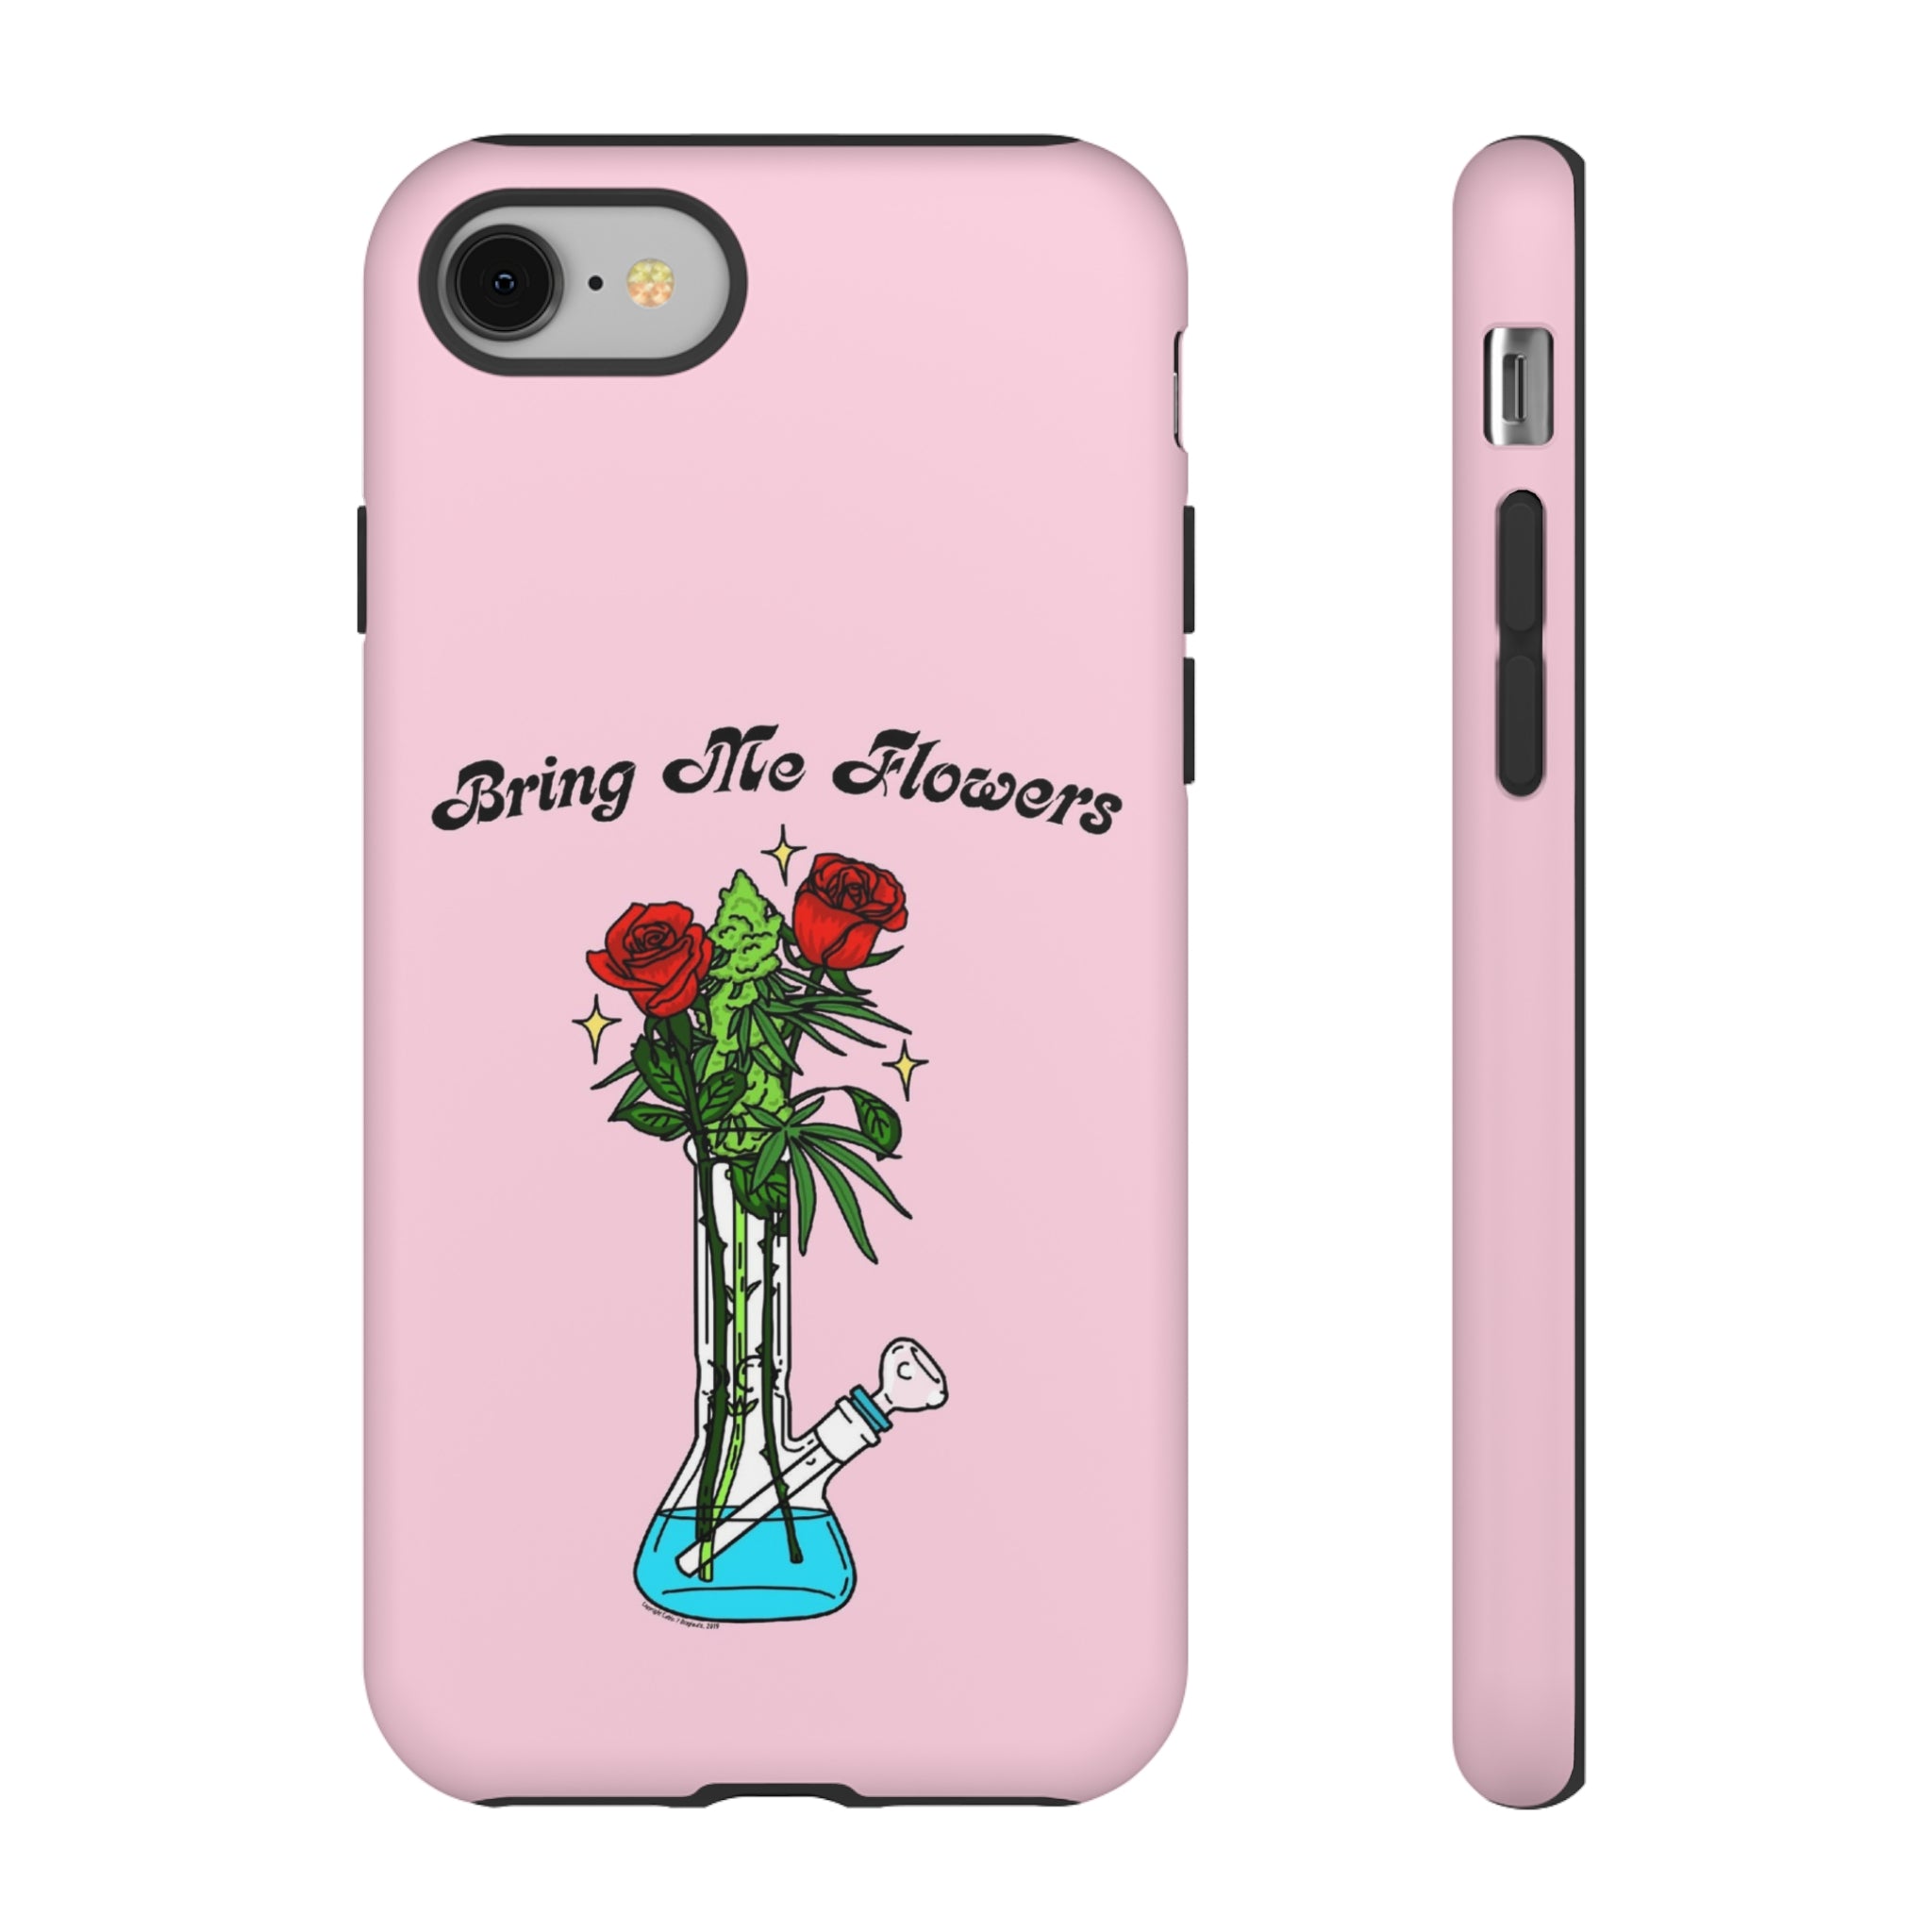 Bring Me Flowers Phone Case